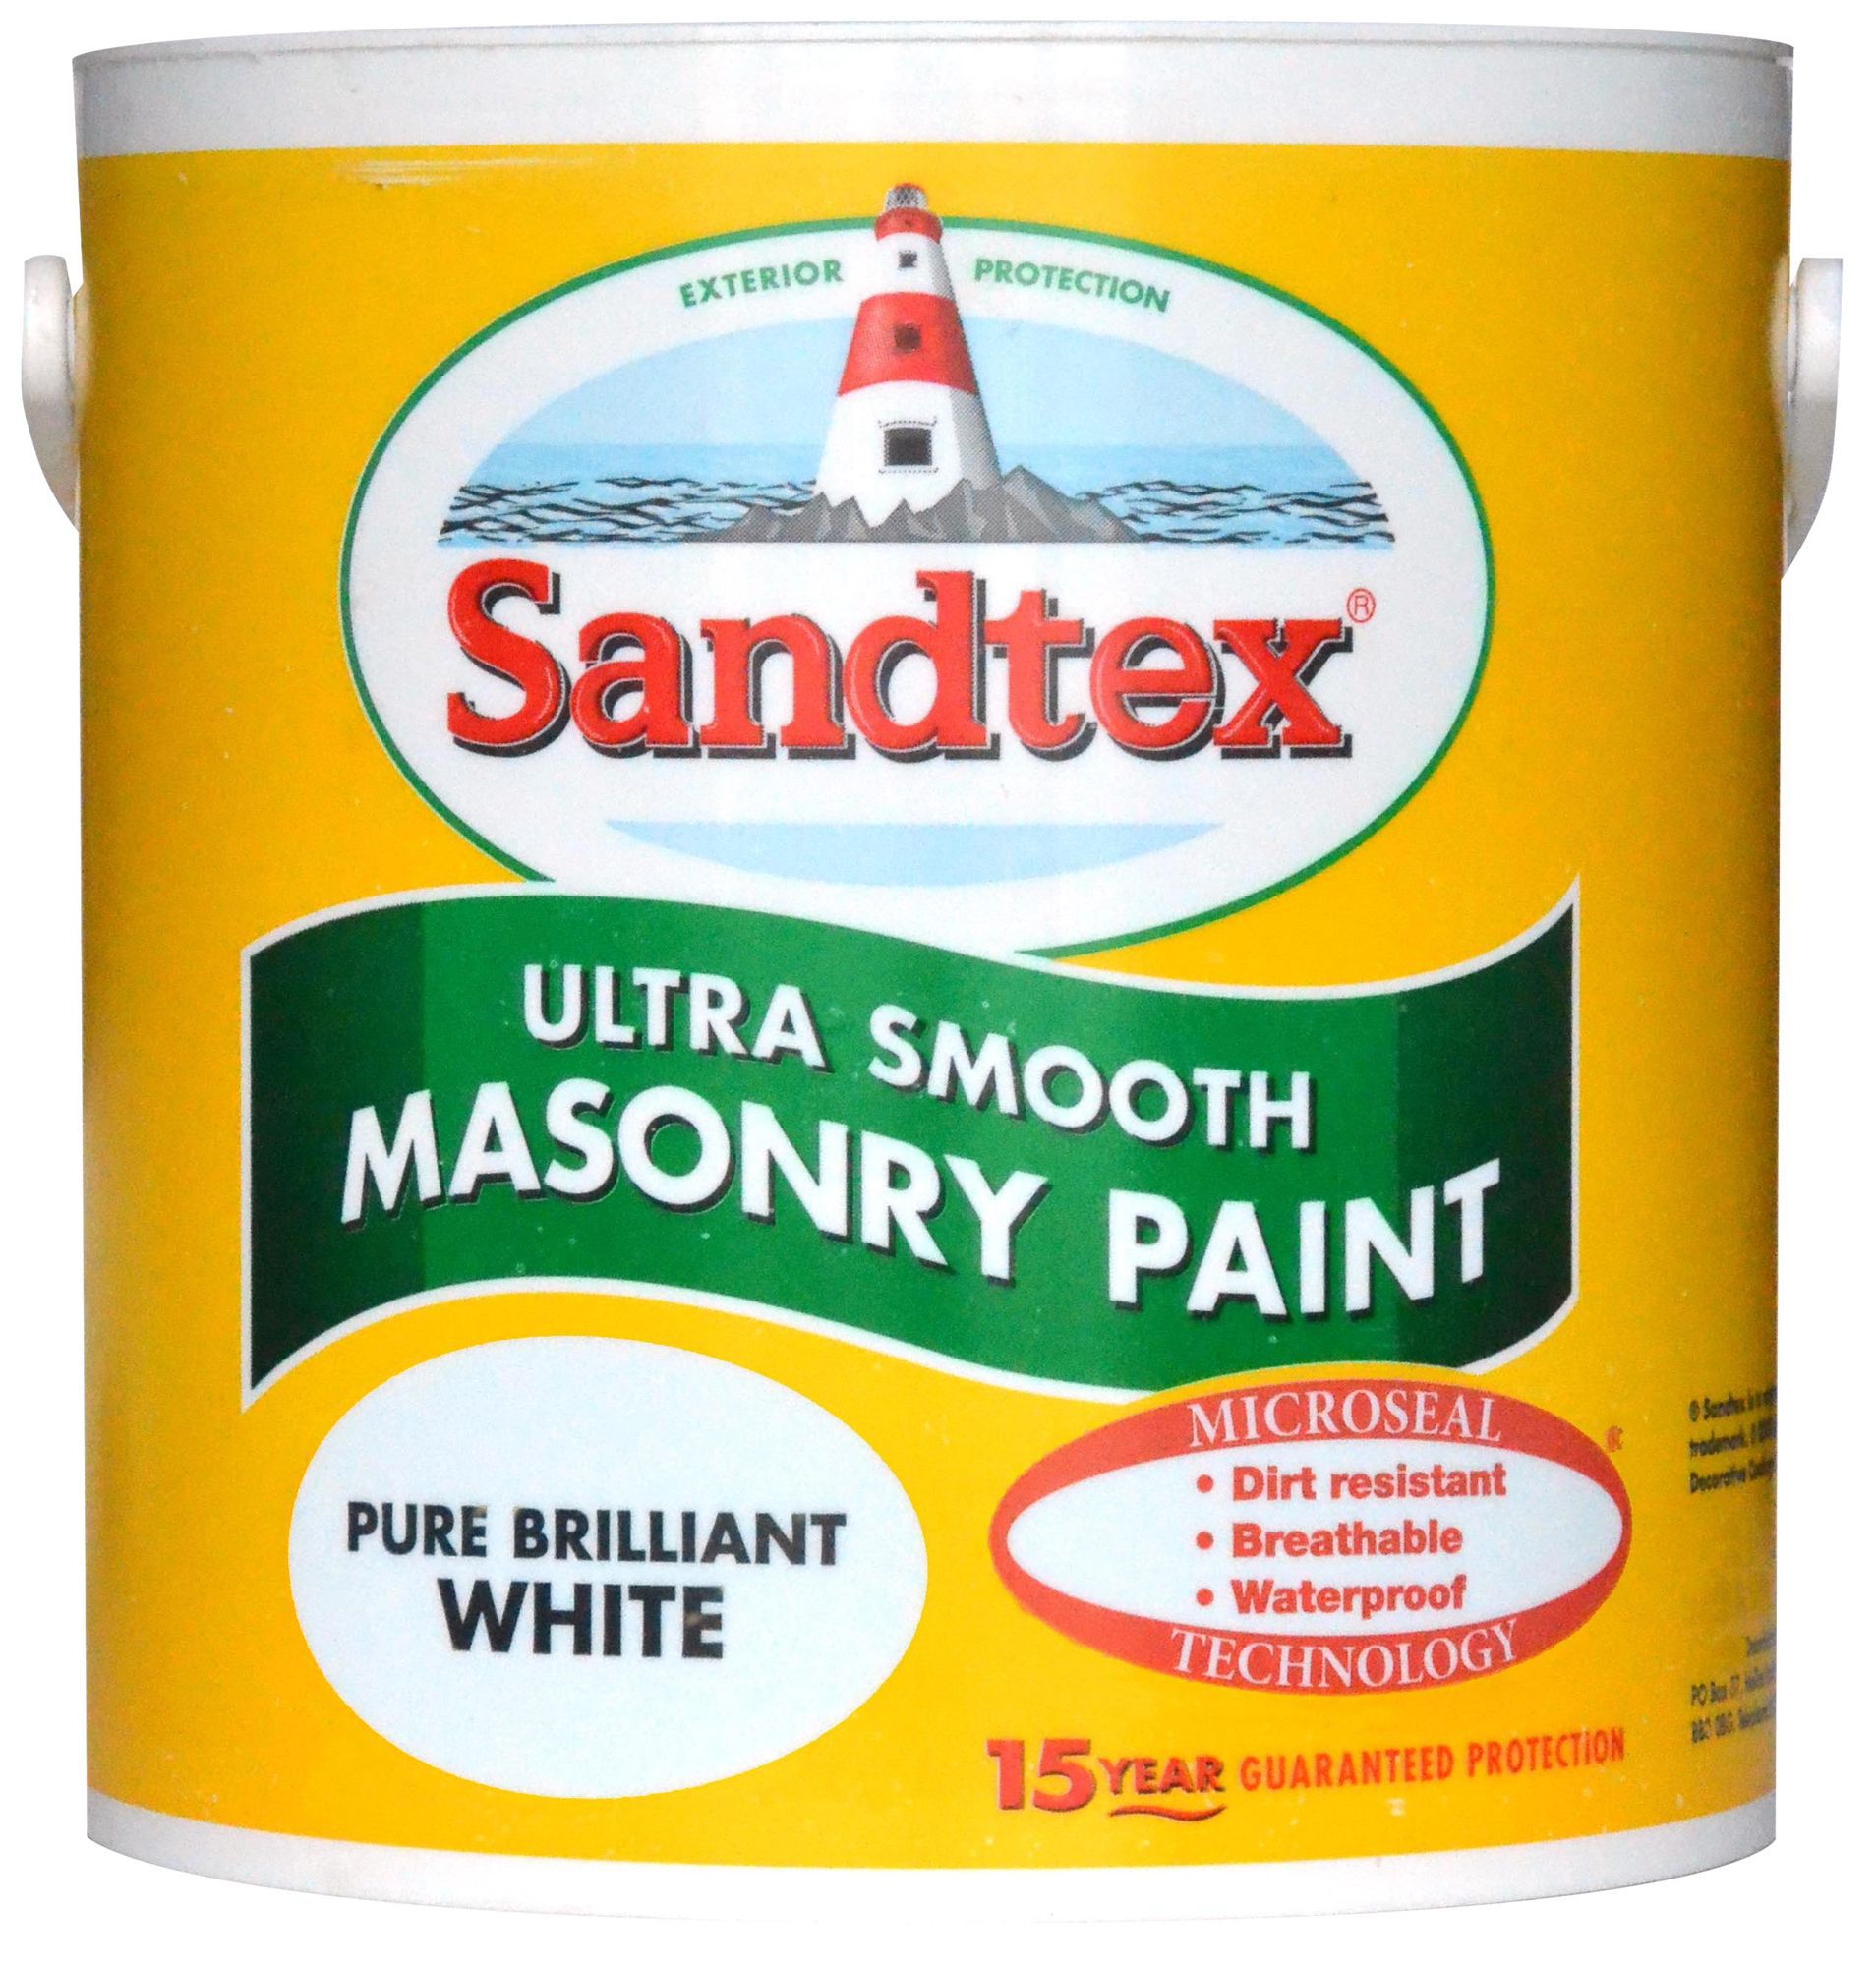 Sandtex Microseal Pure brilliant white Smooth Masonry paint, 2.5L